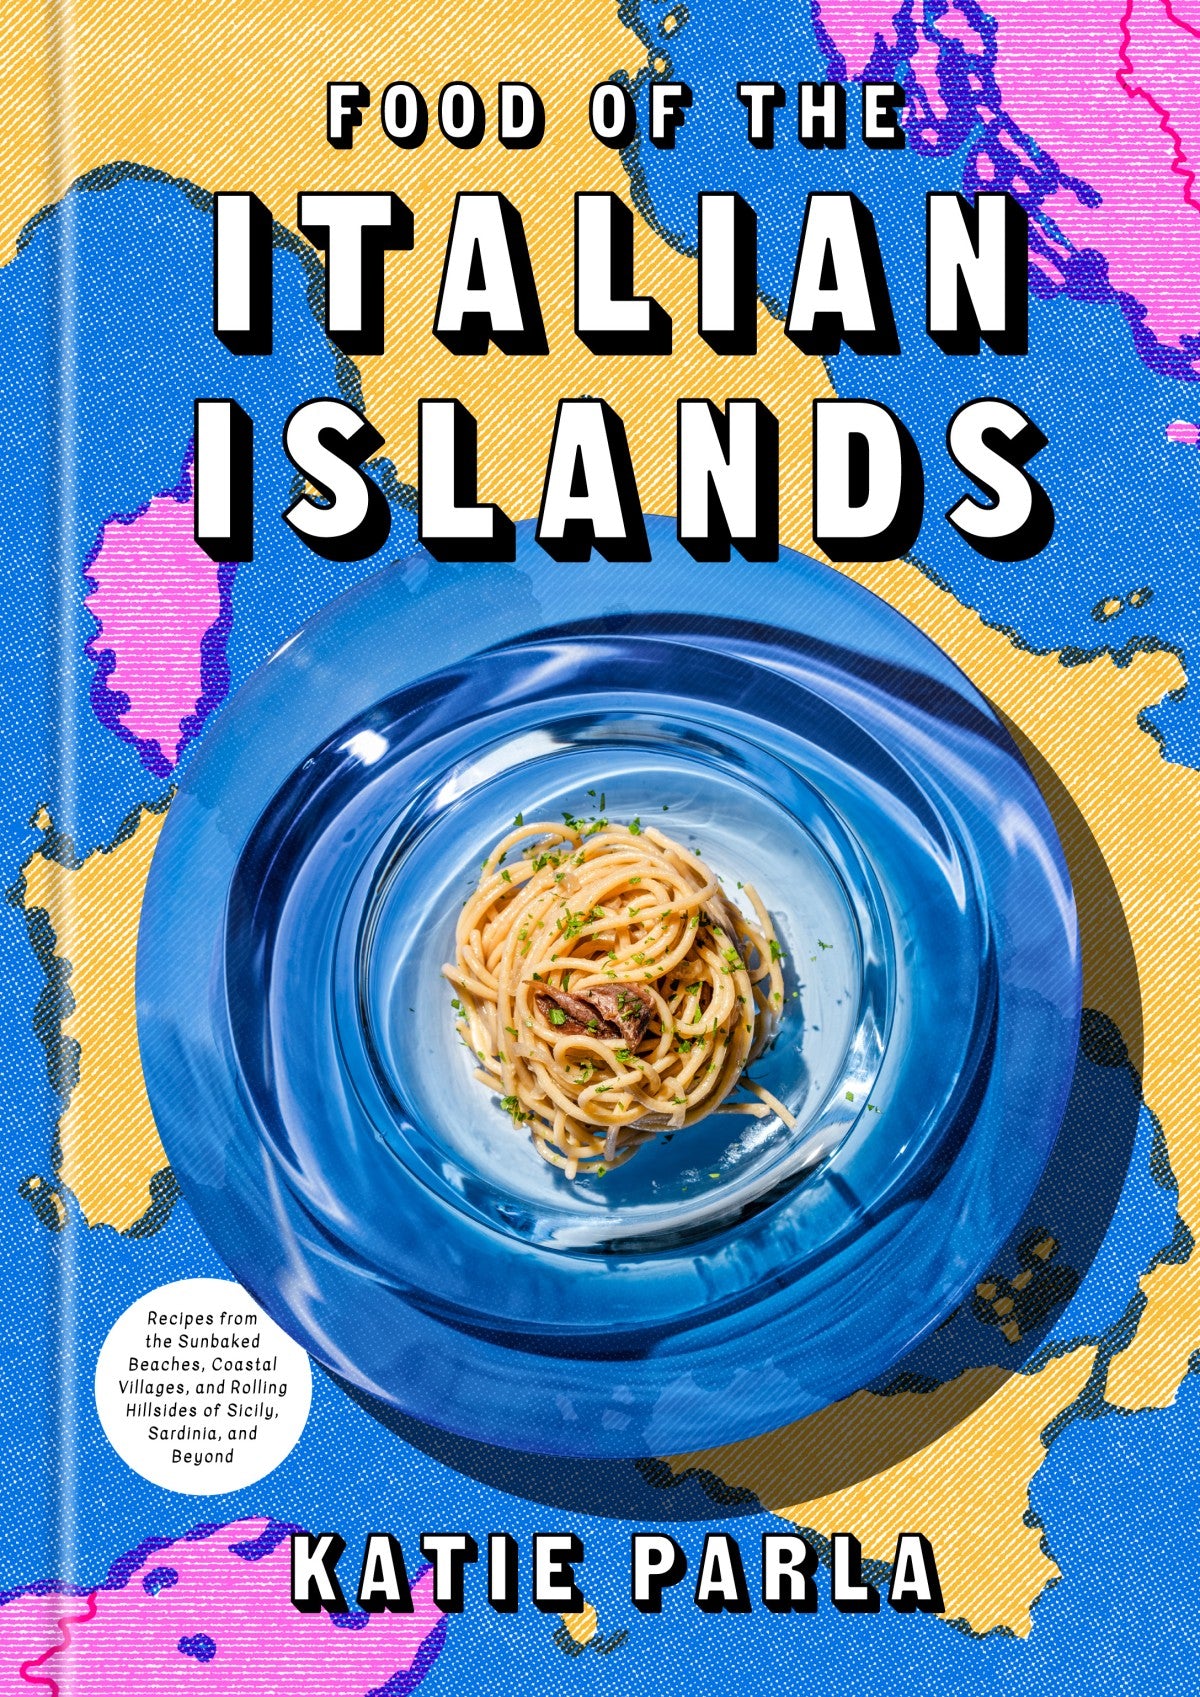 Food of the Italian Islands (Katie Parla)